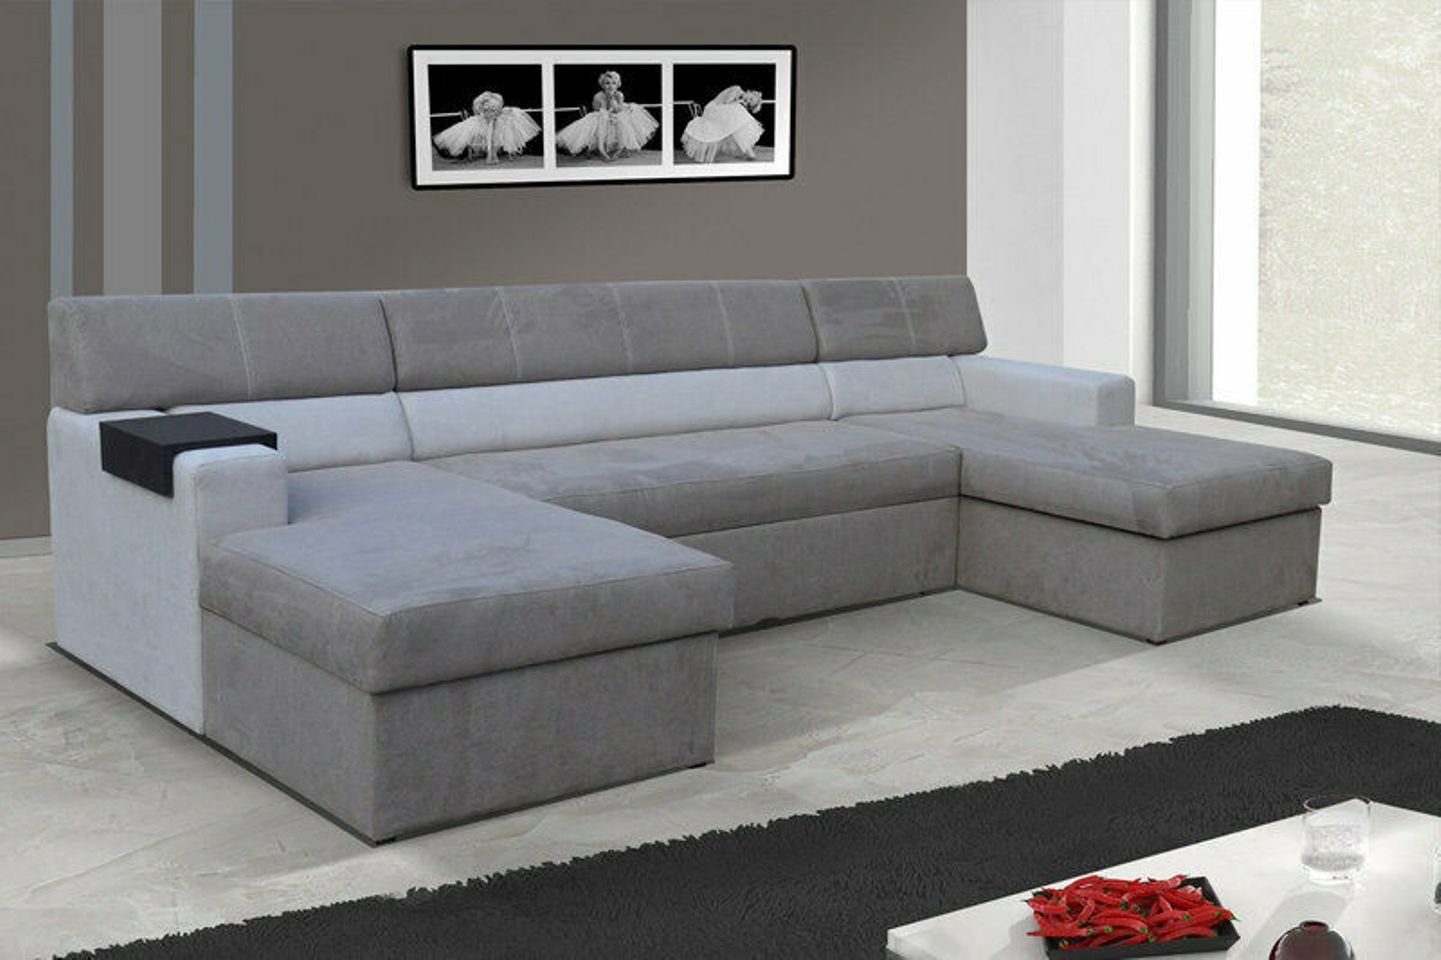 JVmoebel Ecksofa, Design Ecksofa Markos U-form Bettfunktion Couch Grau